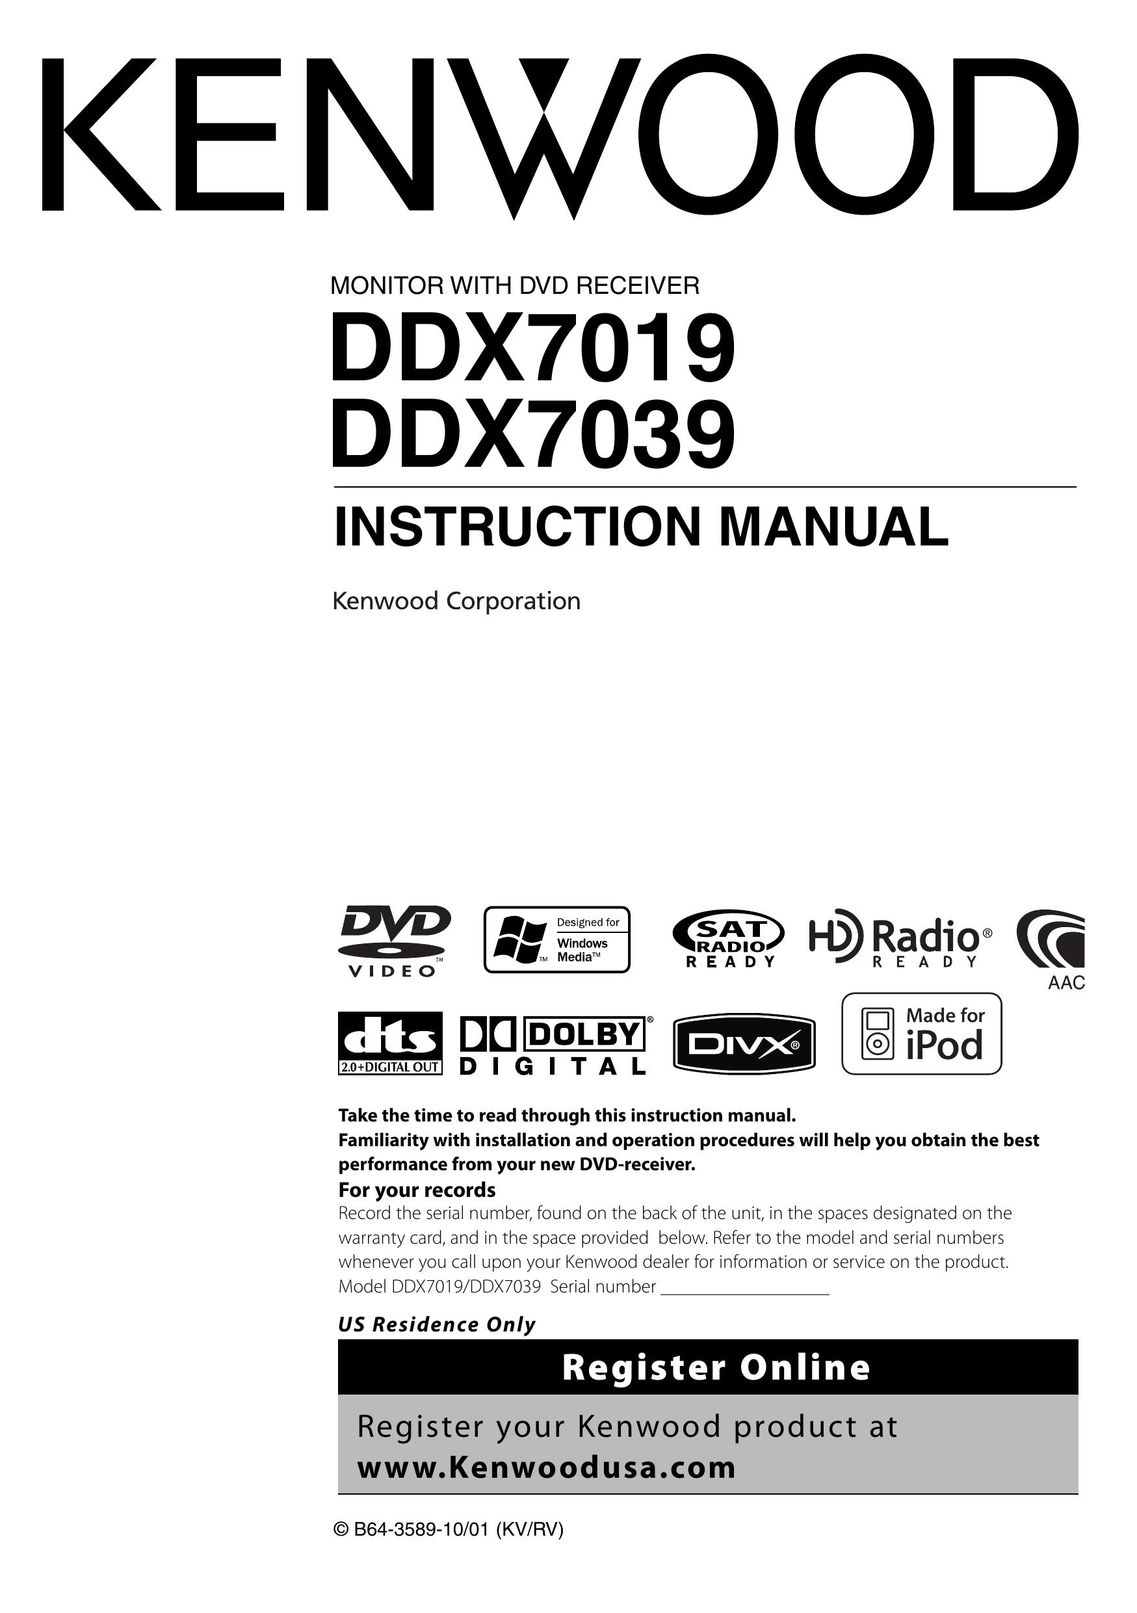 Kenwood DDX7039 Computer Monitor User Manual